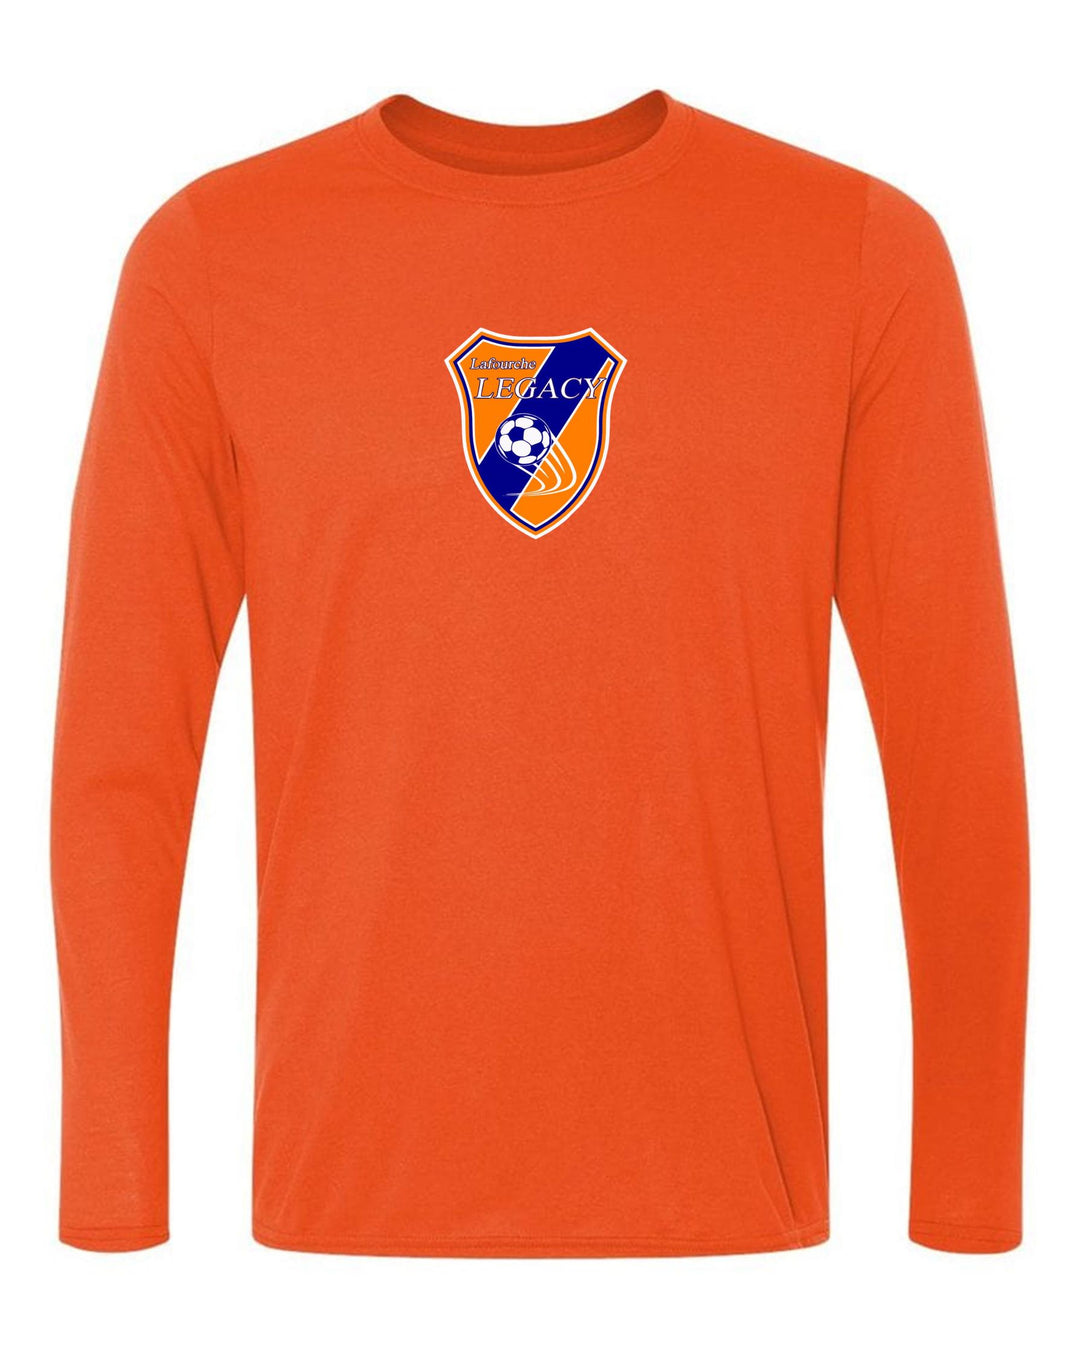 Lefourche Legacy Long-sleeve T-shirt - Navy or Orange  YOUTH SMALL ORANGE - Third Coast Soccer